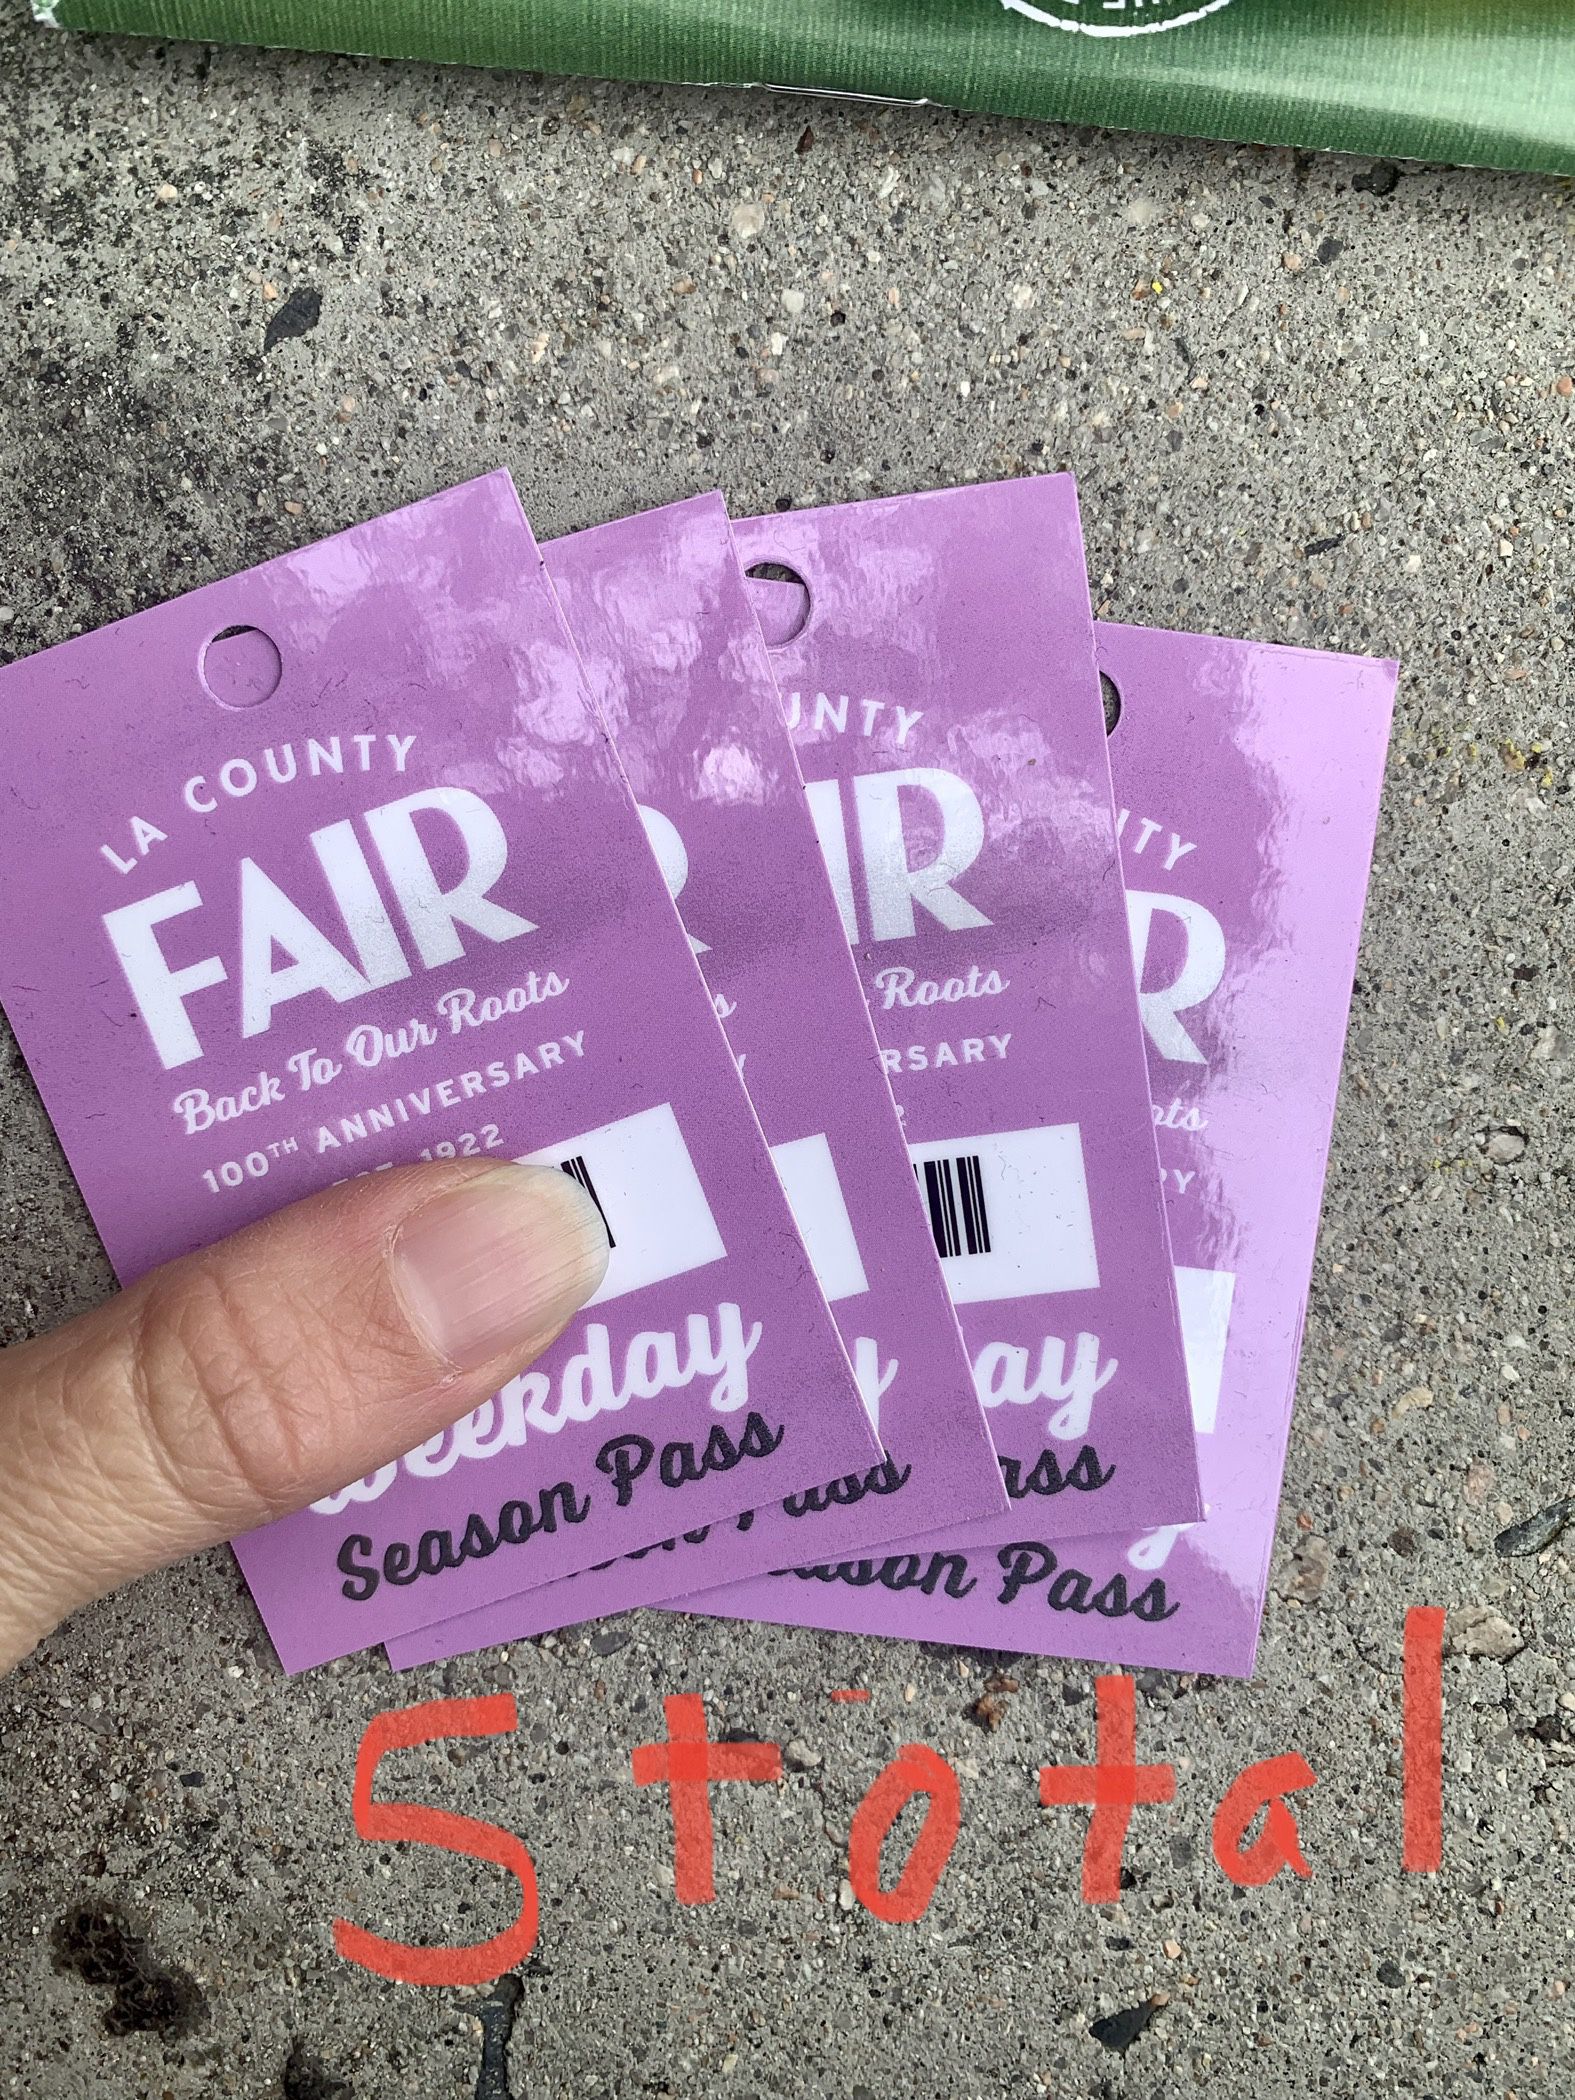 5 LA FAIR Pomona Fairplex Entry Tickets